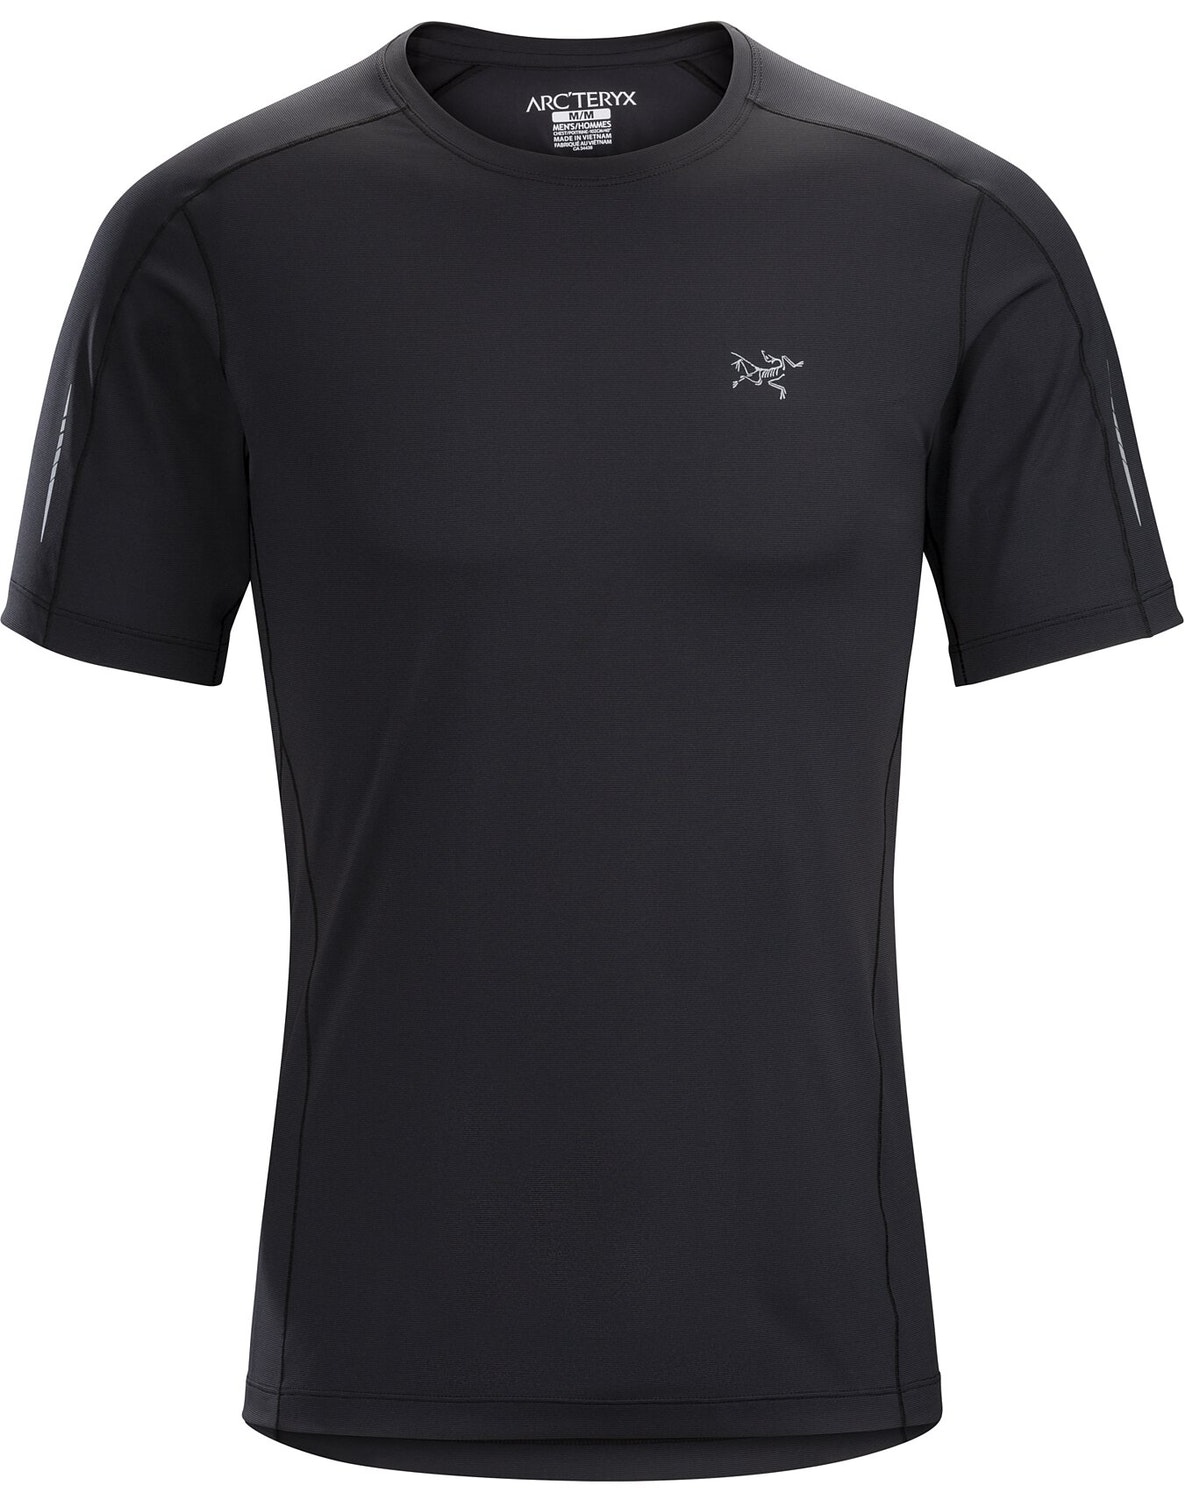 T-shirt Arc'teryx Motus Crew Neck Uomo Nere - IT-1565664